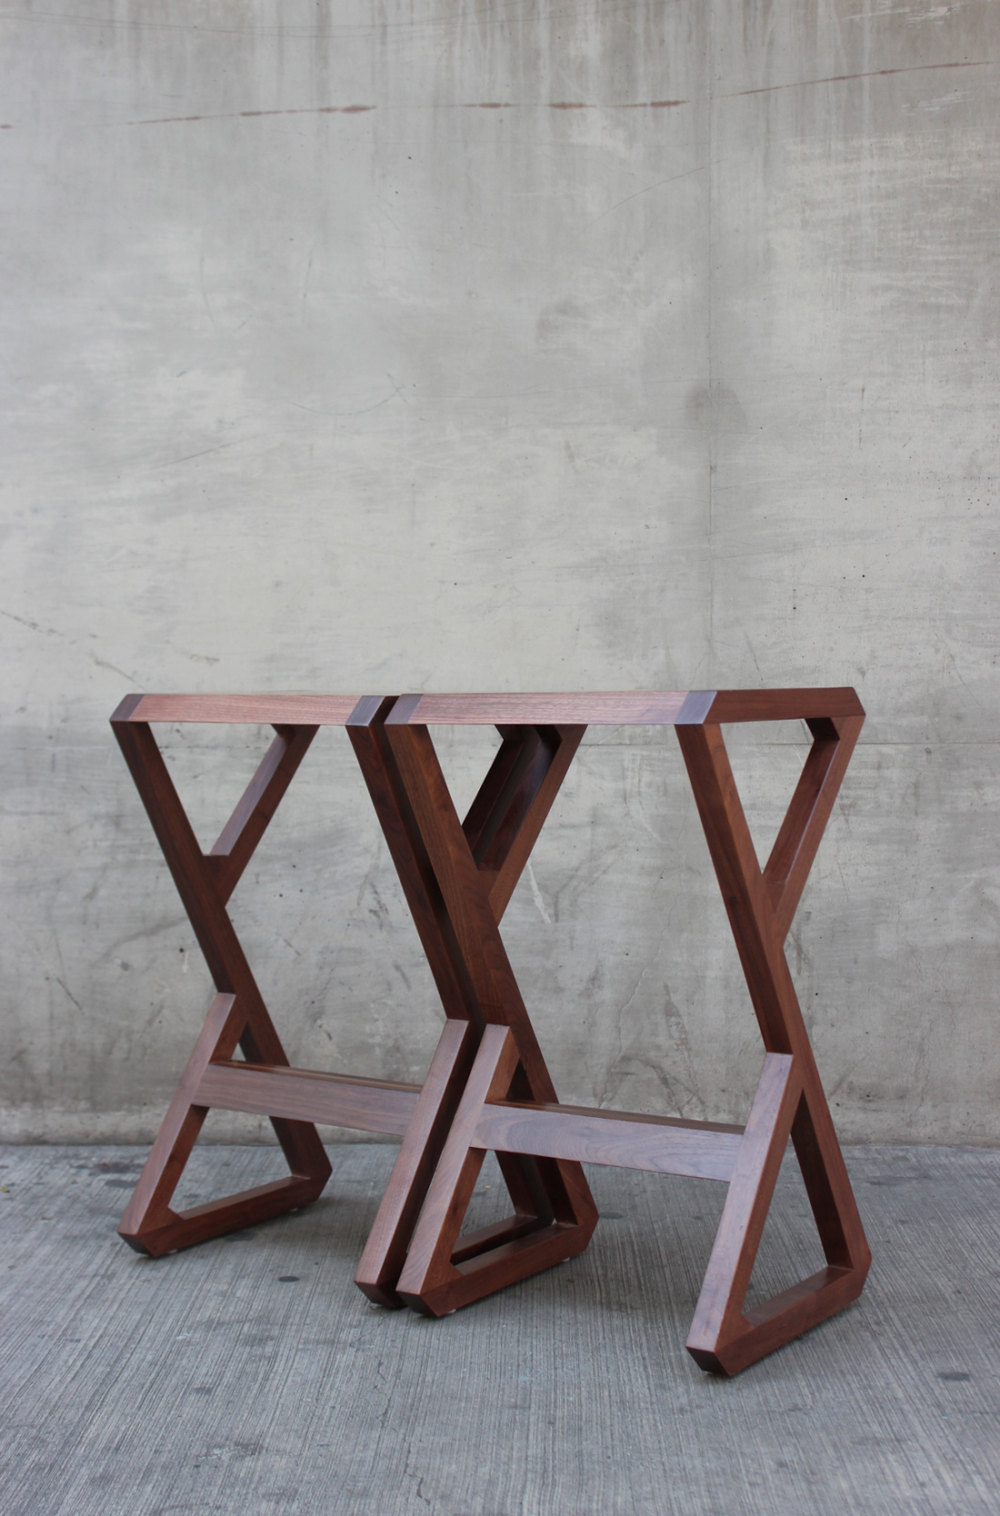 b12-stool-by-oscar-nunez-11.jpg